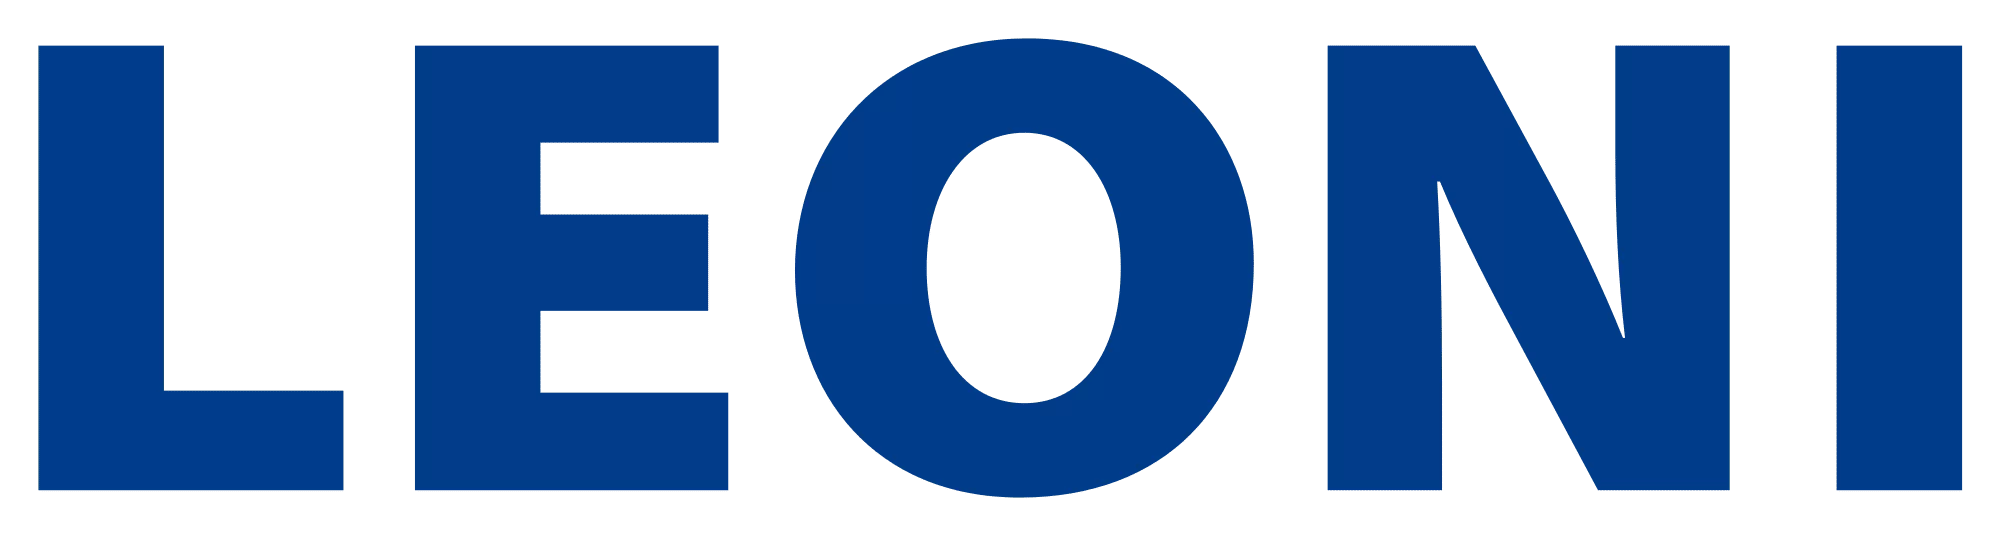 Leoni-logo